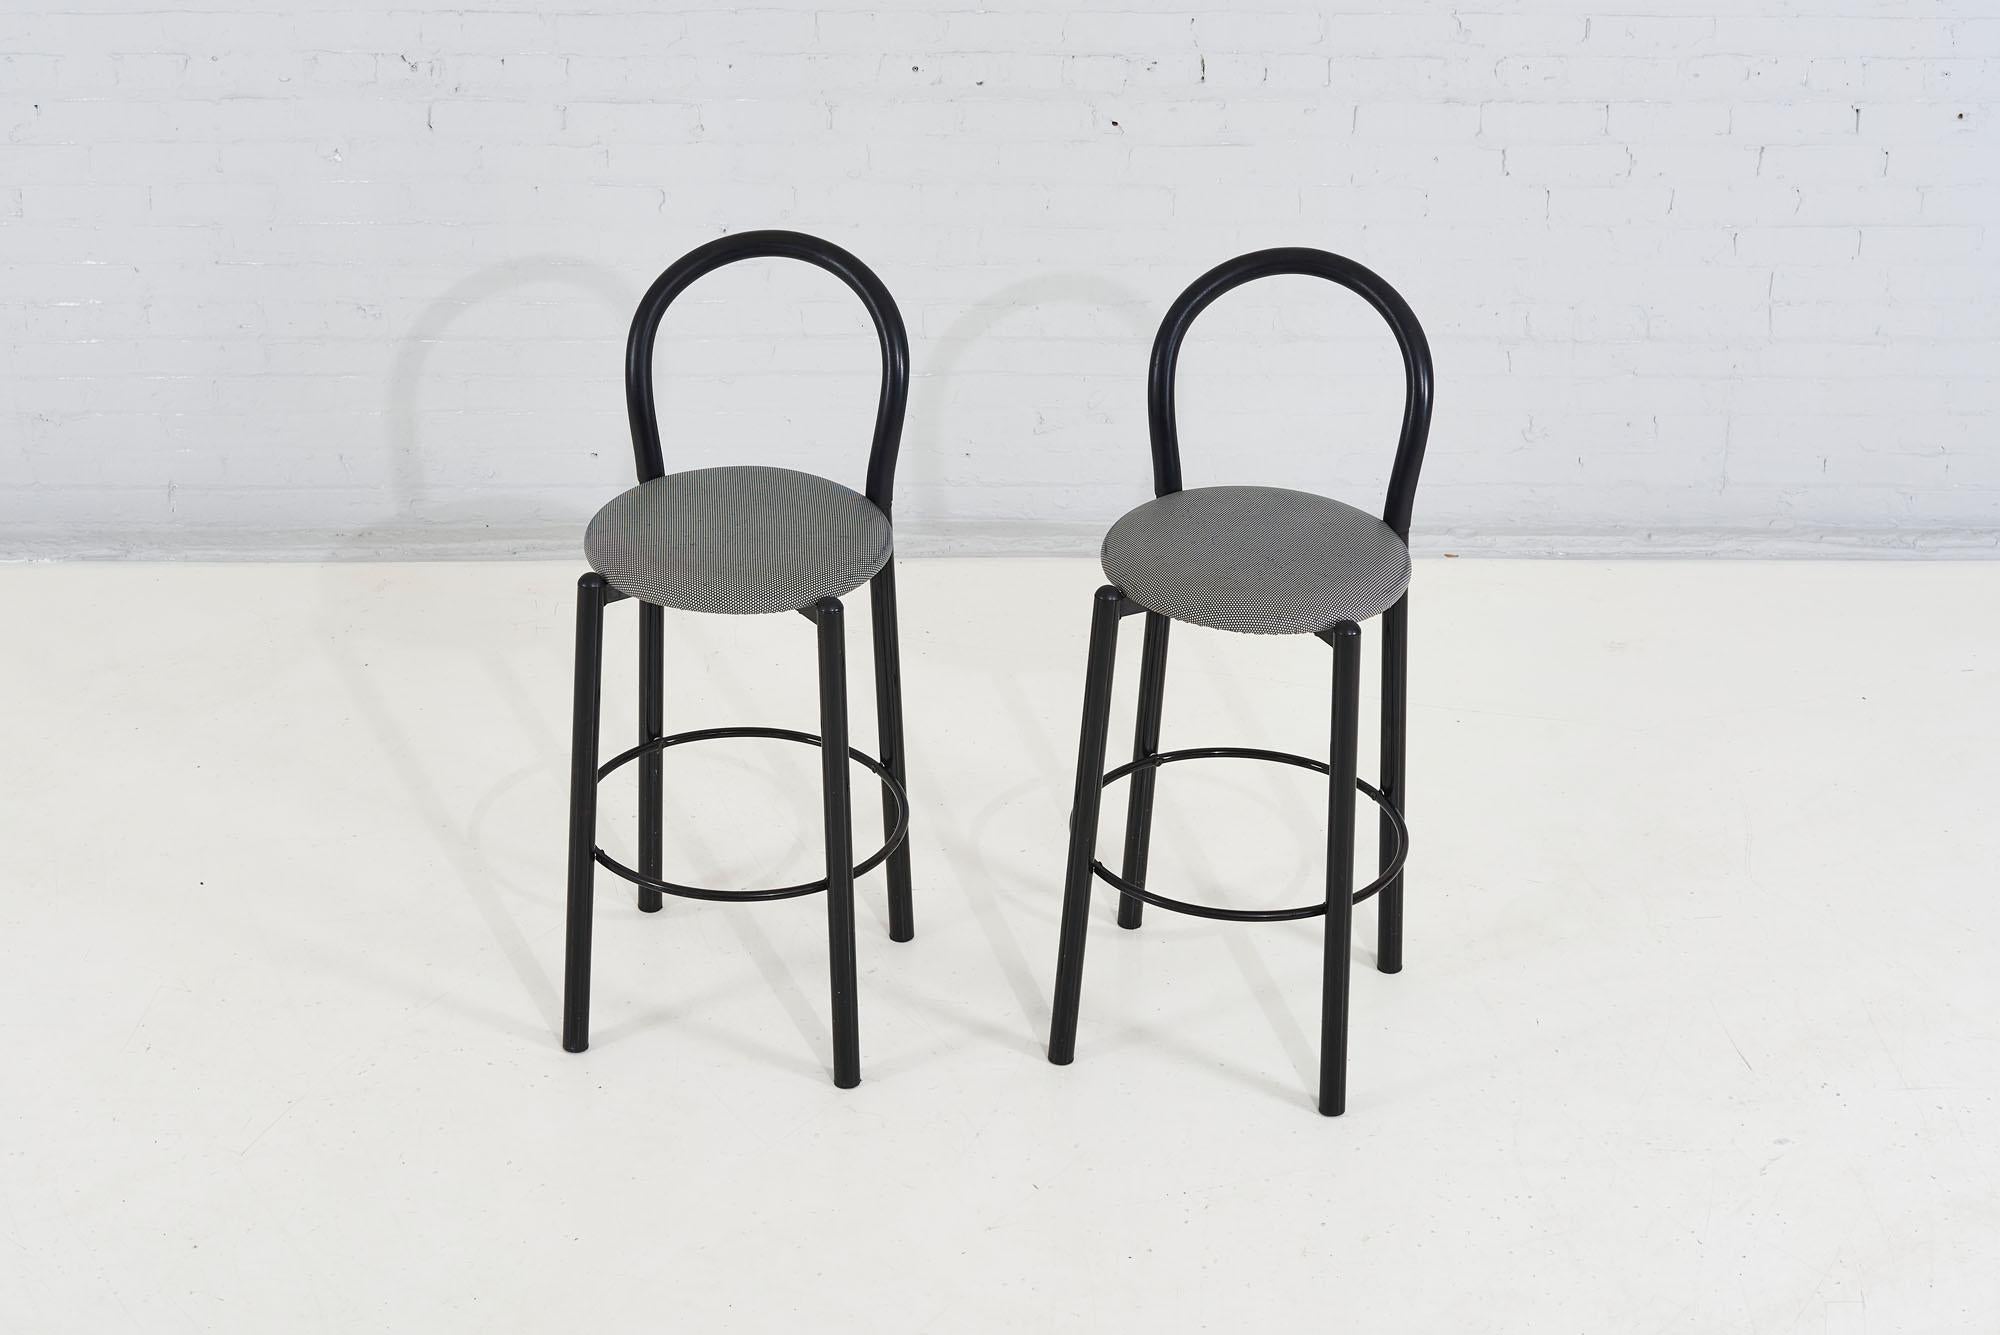 Postmodern pair bar stools, 1980. Rubberized bar seat backs. Original.